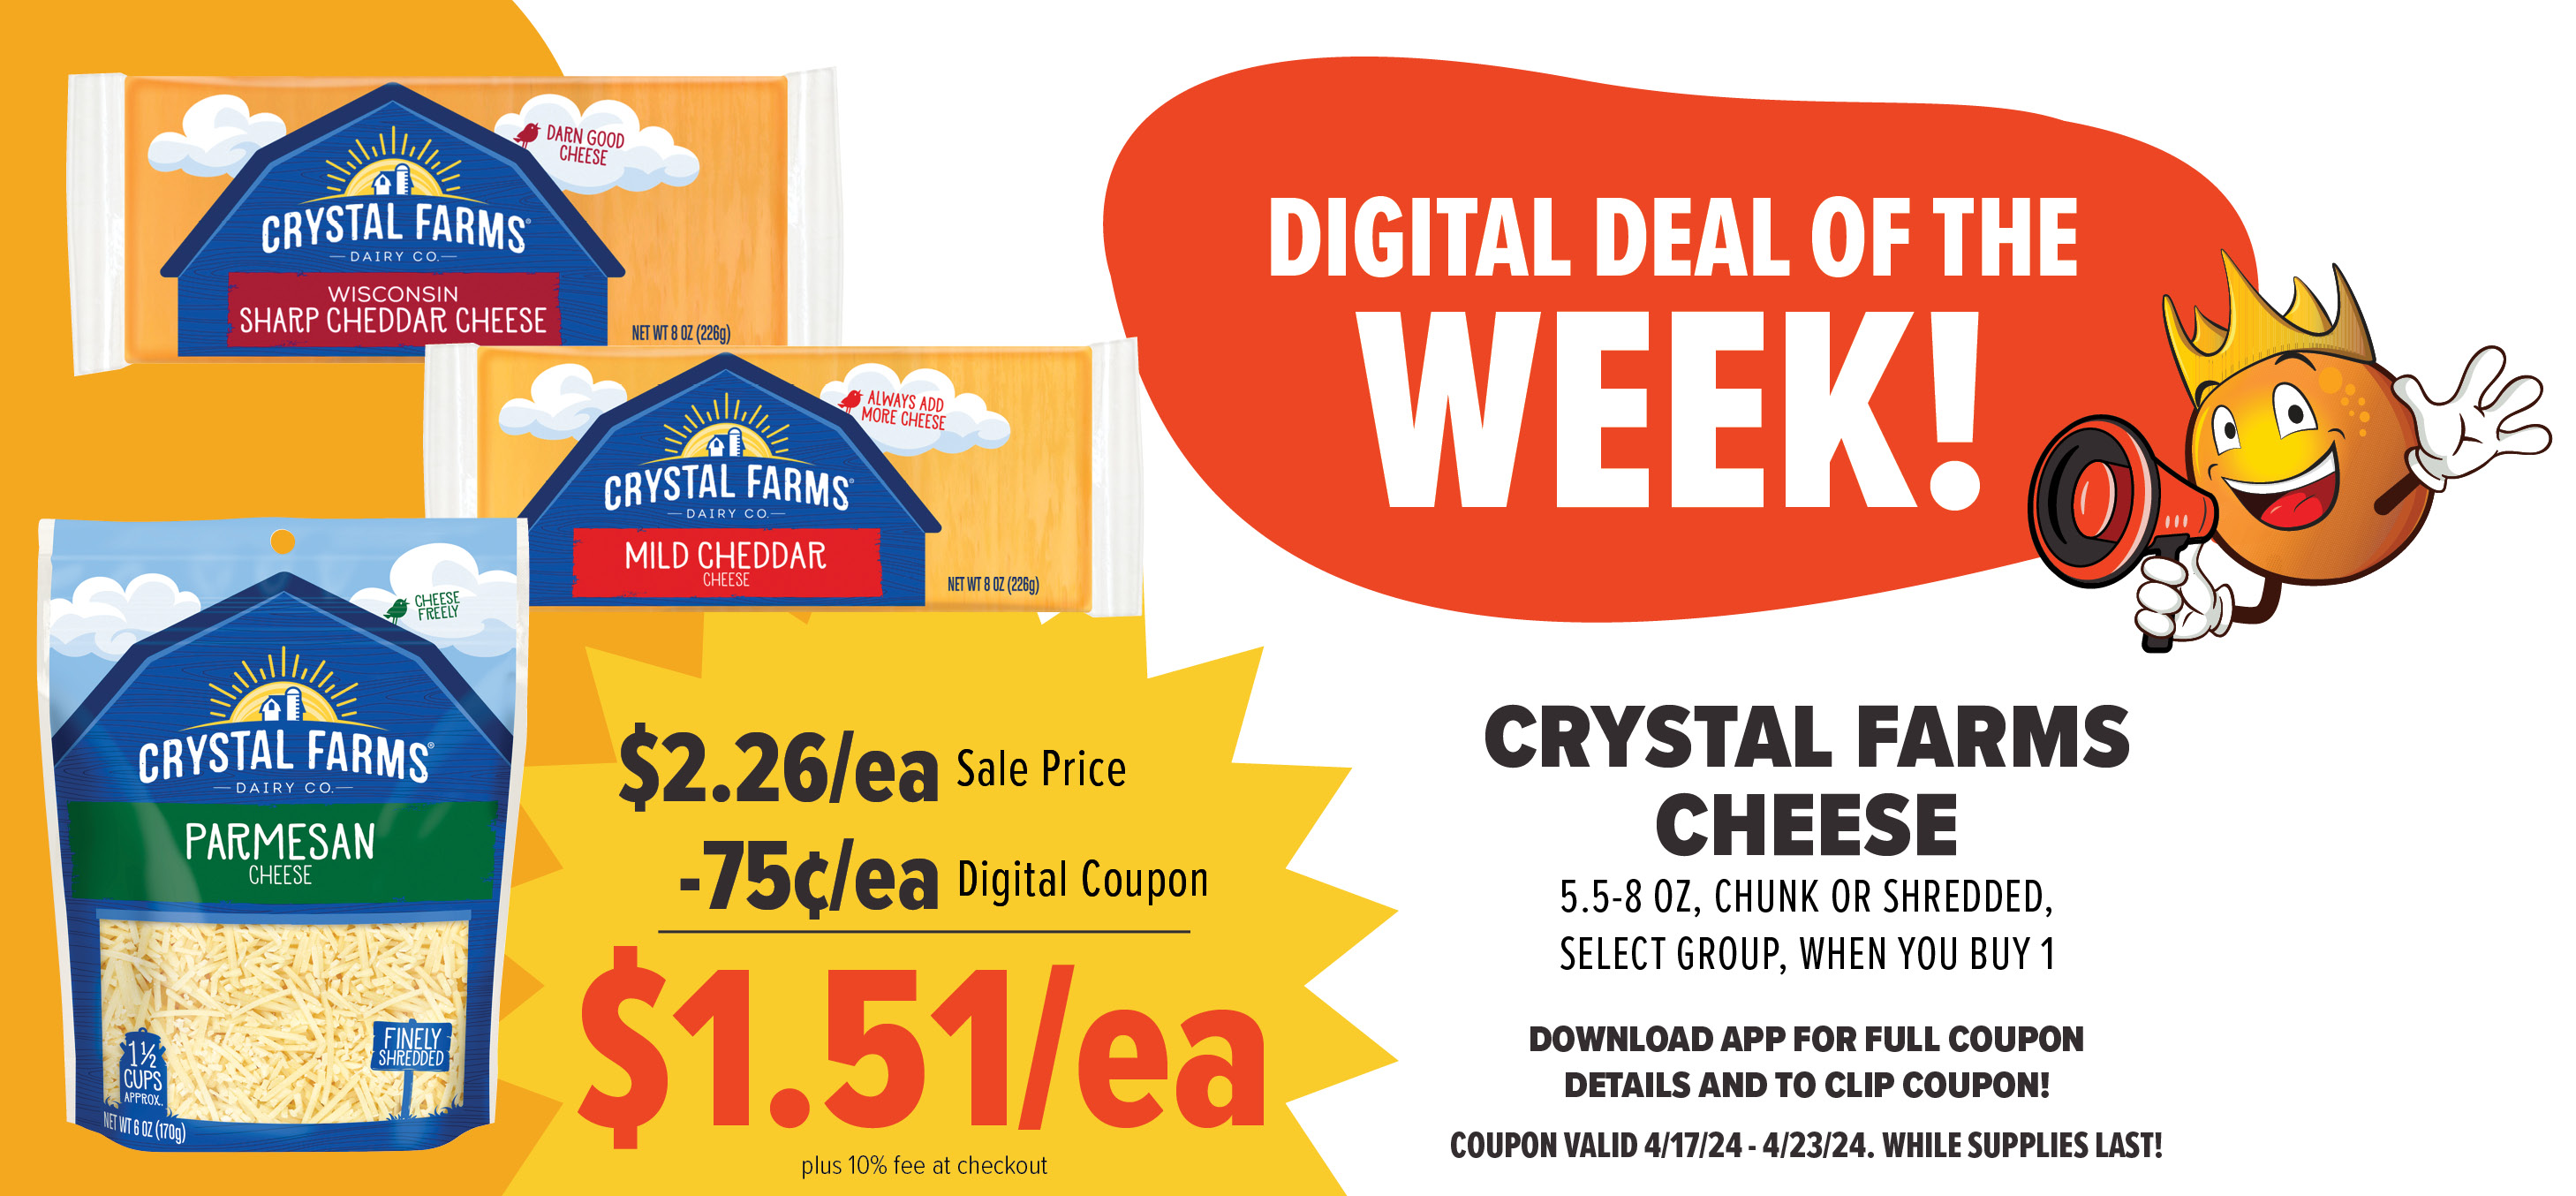 Digital Deal of the Week, Crystal Farms Cheese